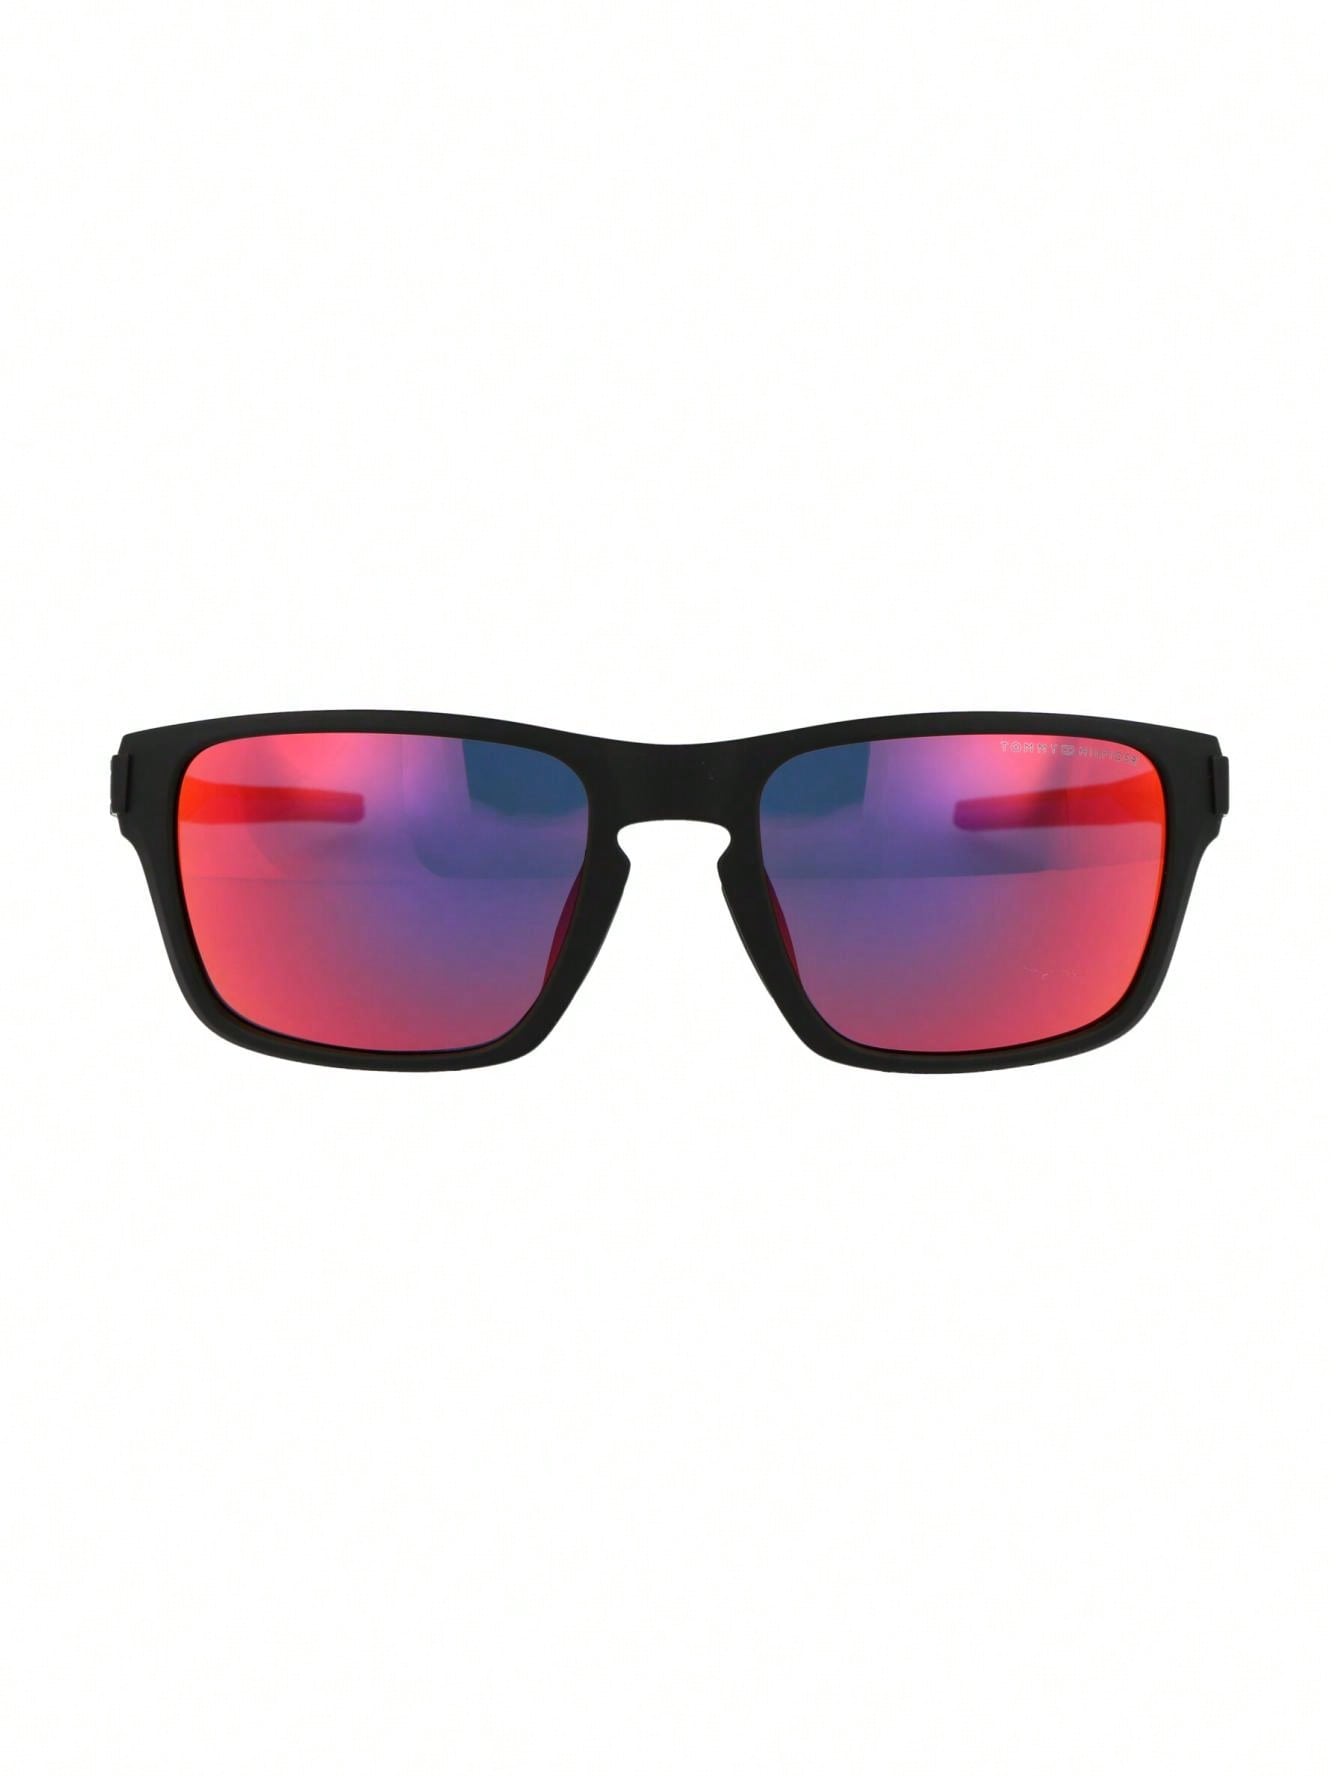 Мужские солнцезащитные очки Tommy Hilfiger DECOR TH1952S0VKPL, многоцветный солнцезащитные очки tommy hilfiger синий черный